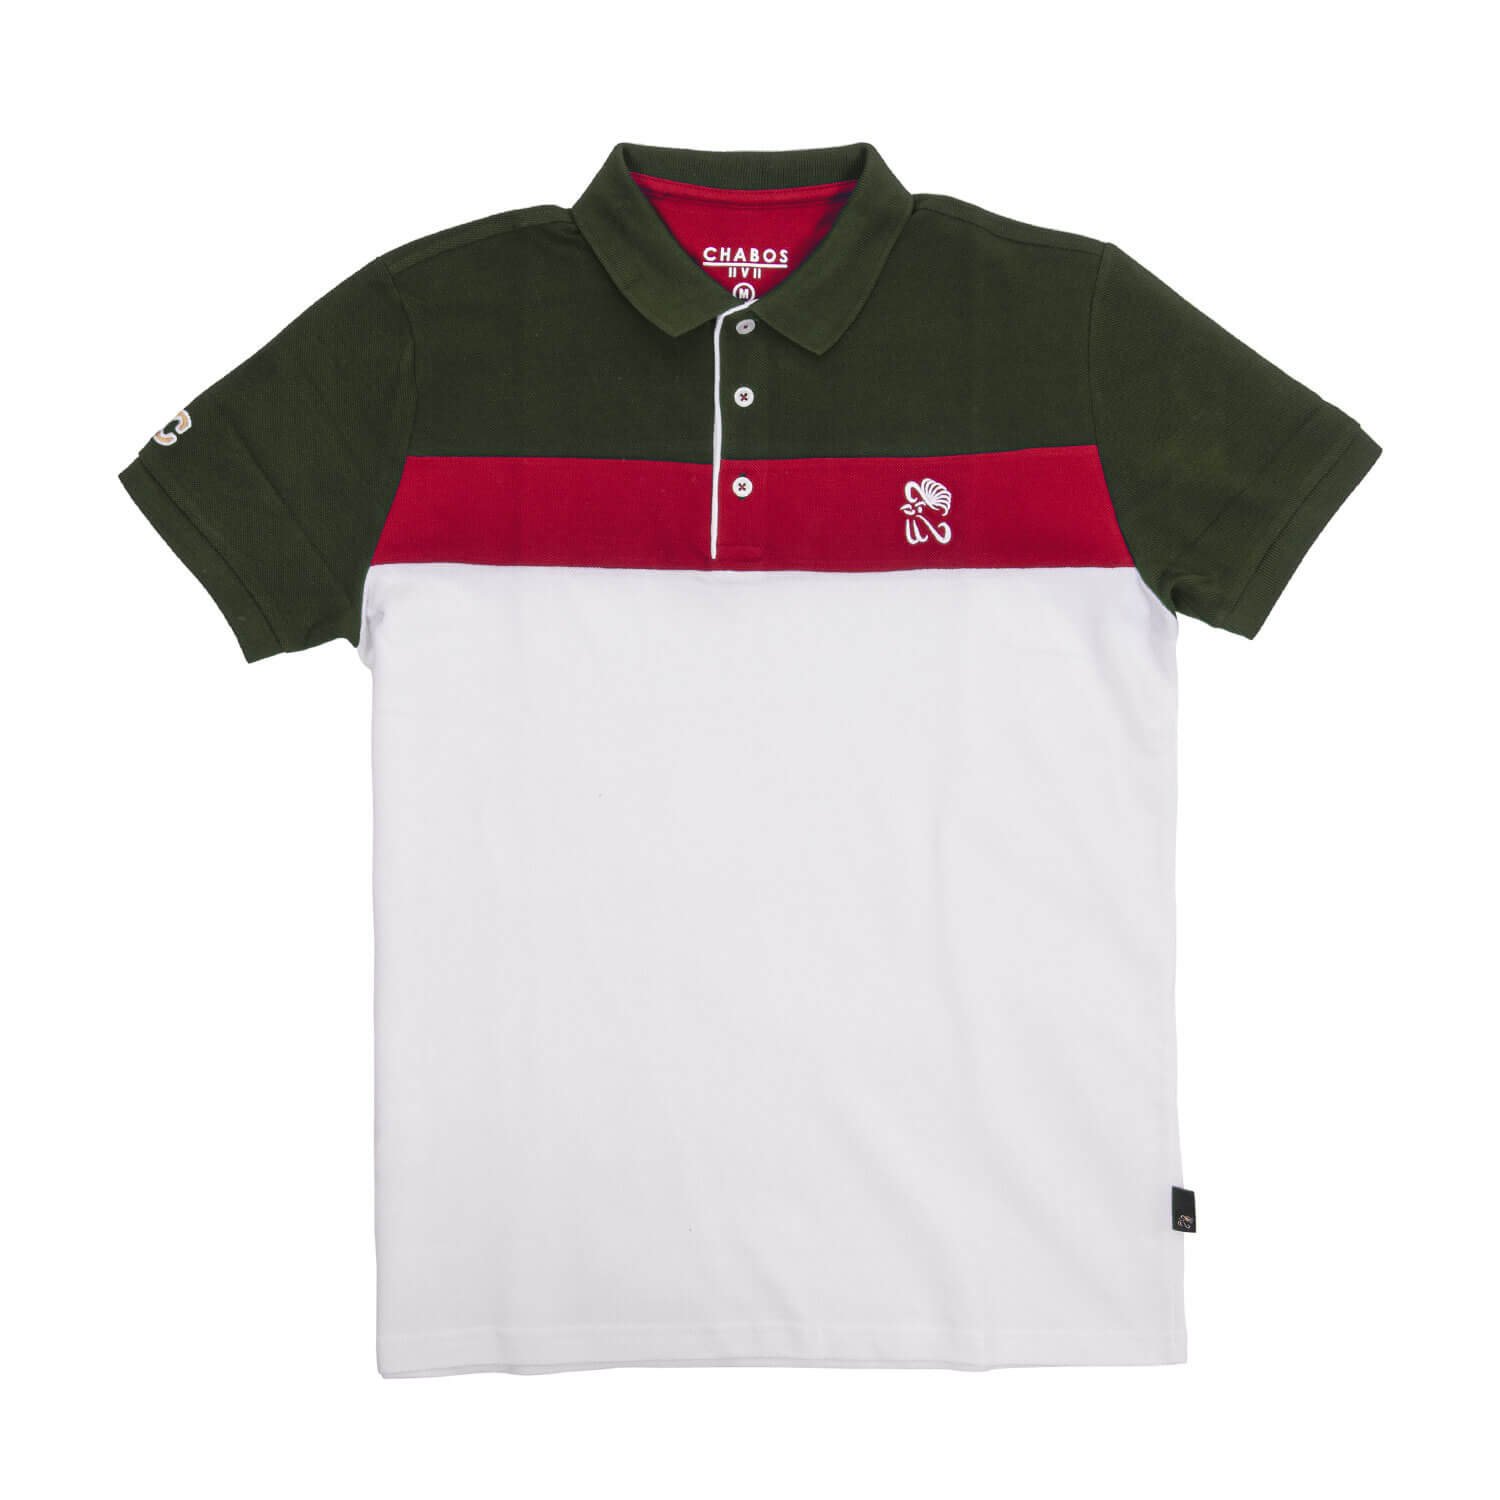 Monte Chabo Polo Shirt (khaki)